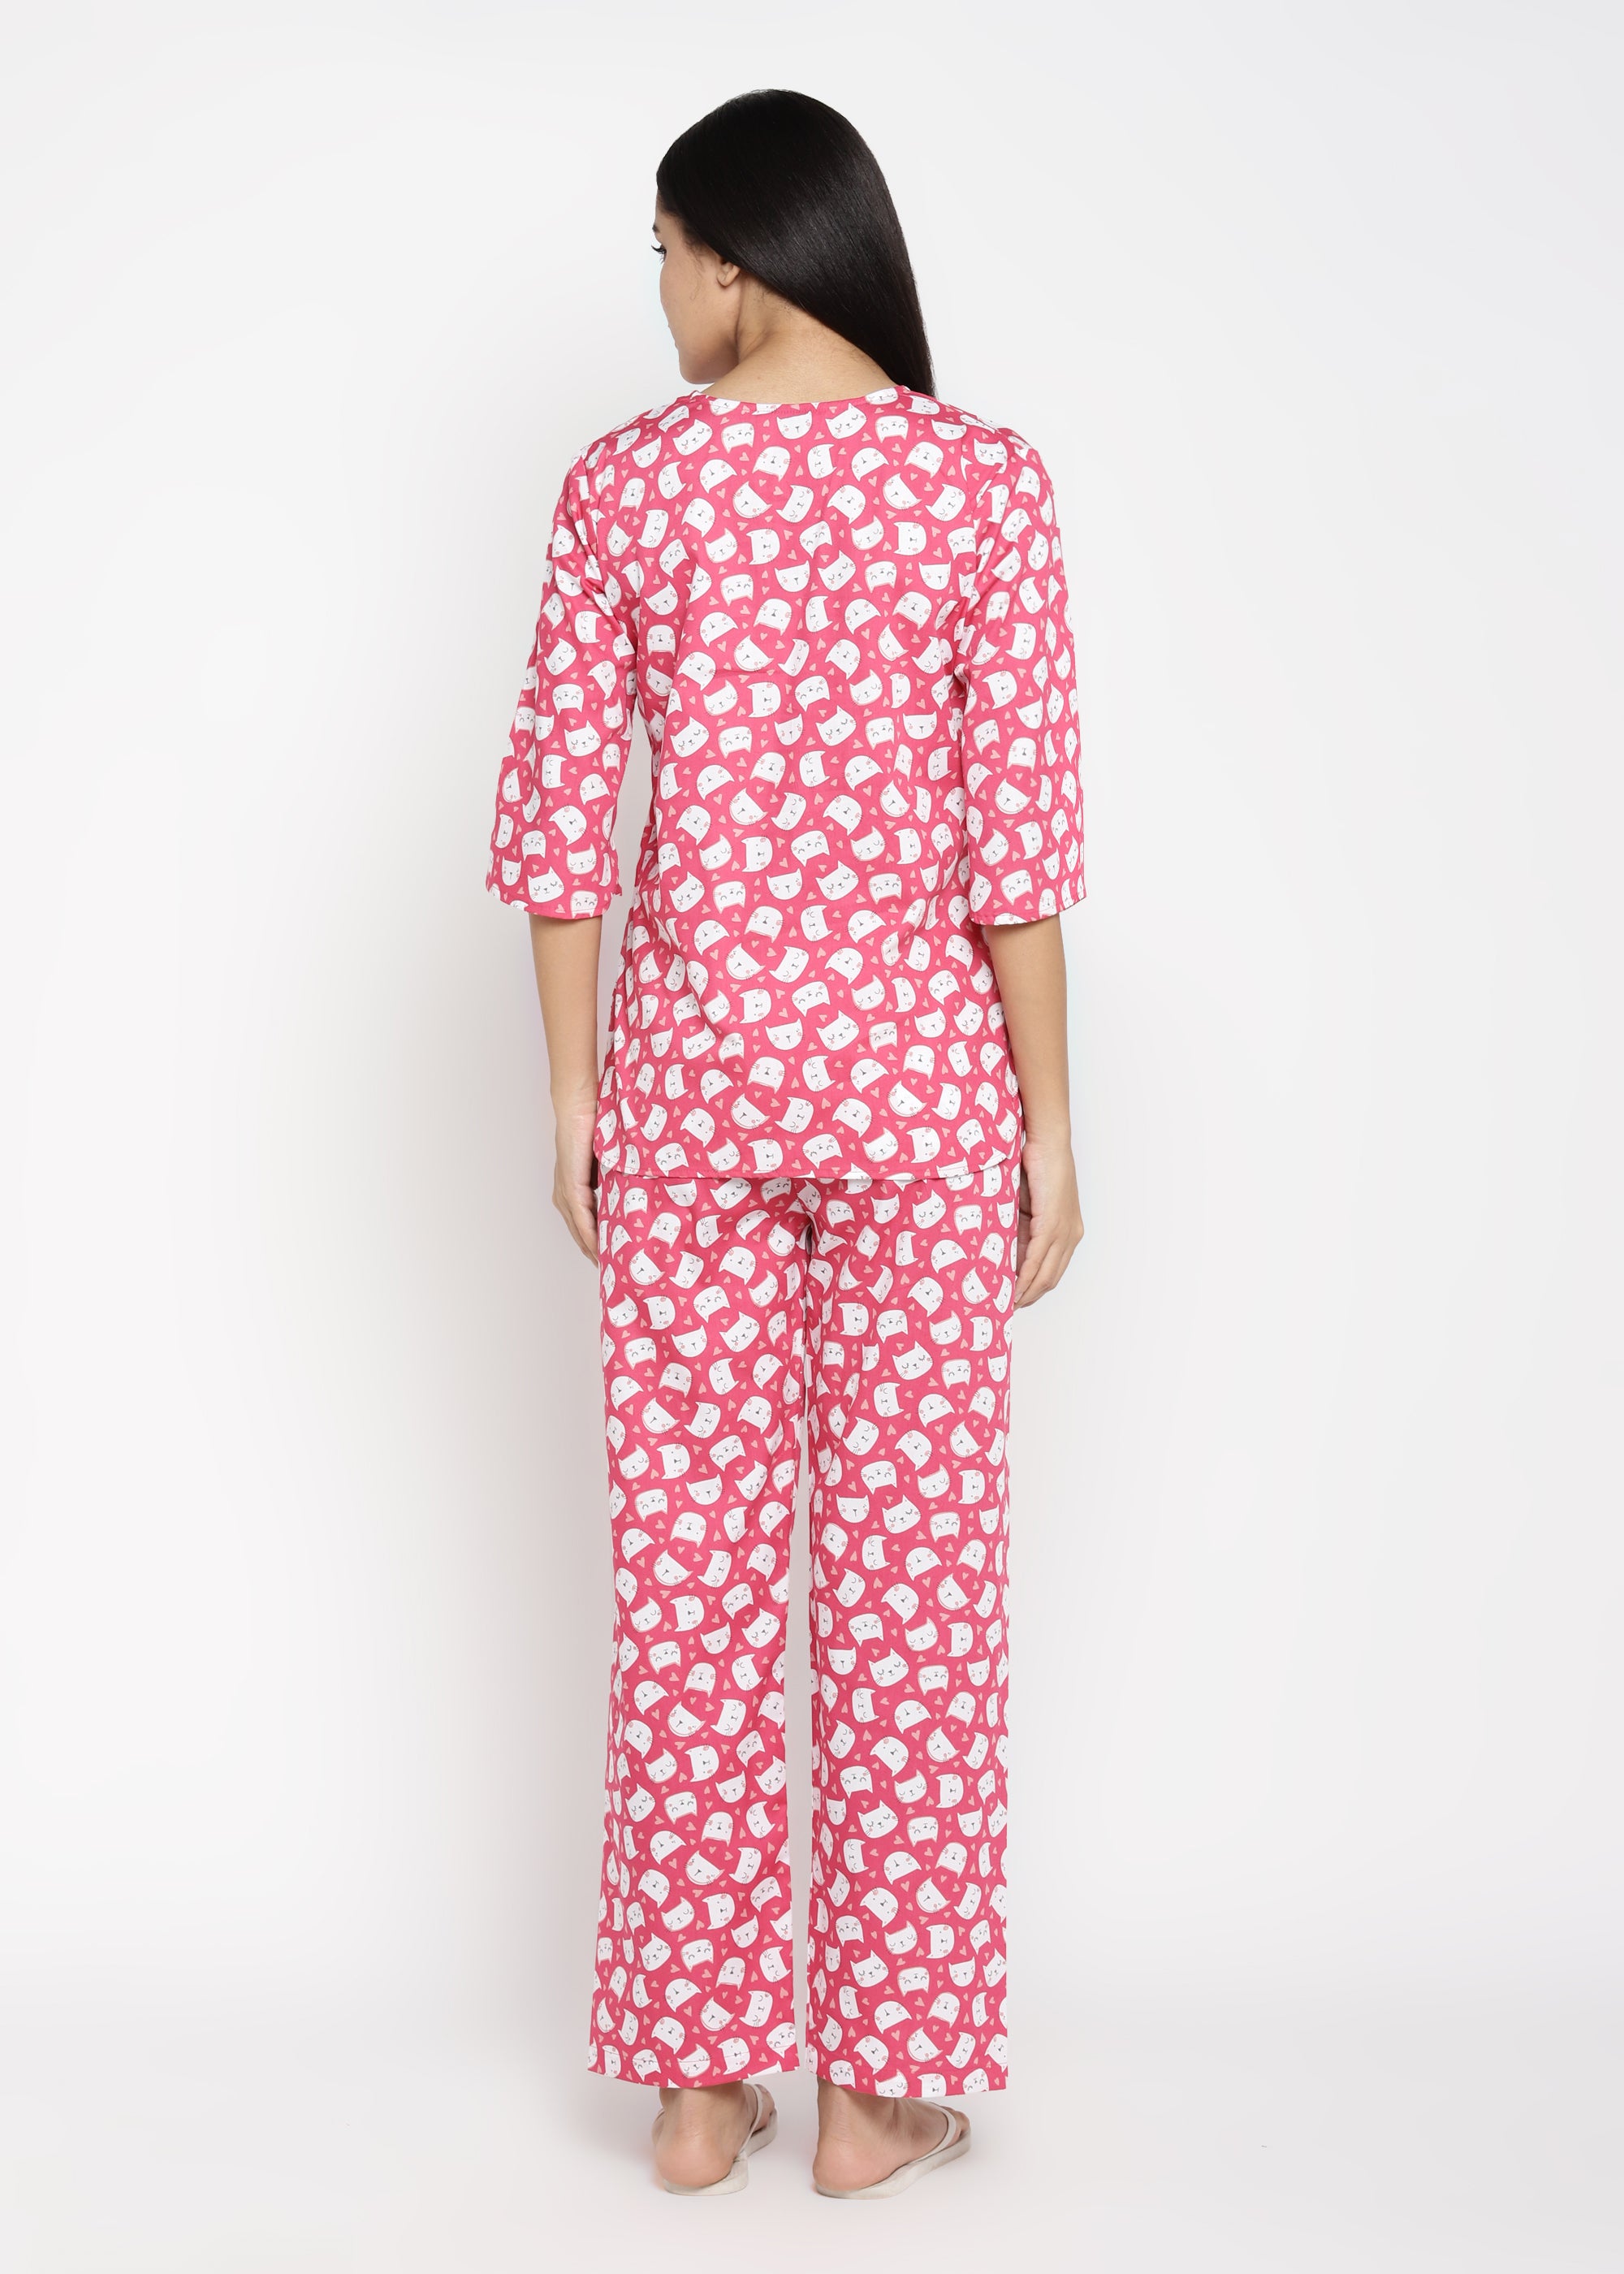 Bright Pink Kitty Print V Neck Women's Night Suit - Shopbloom